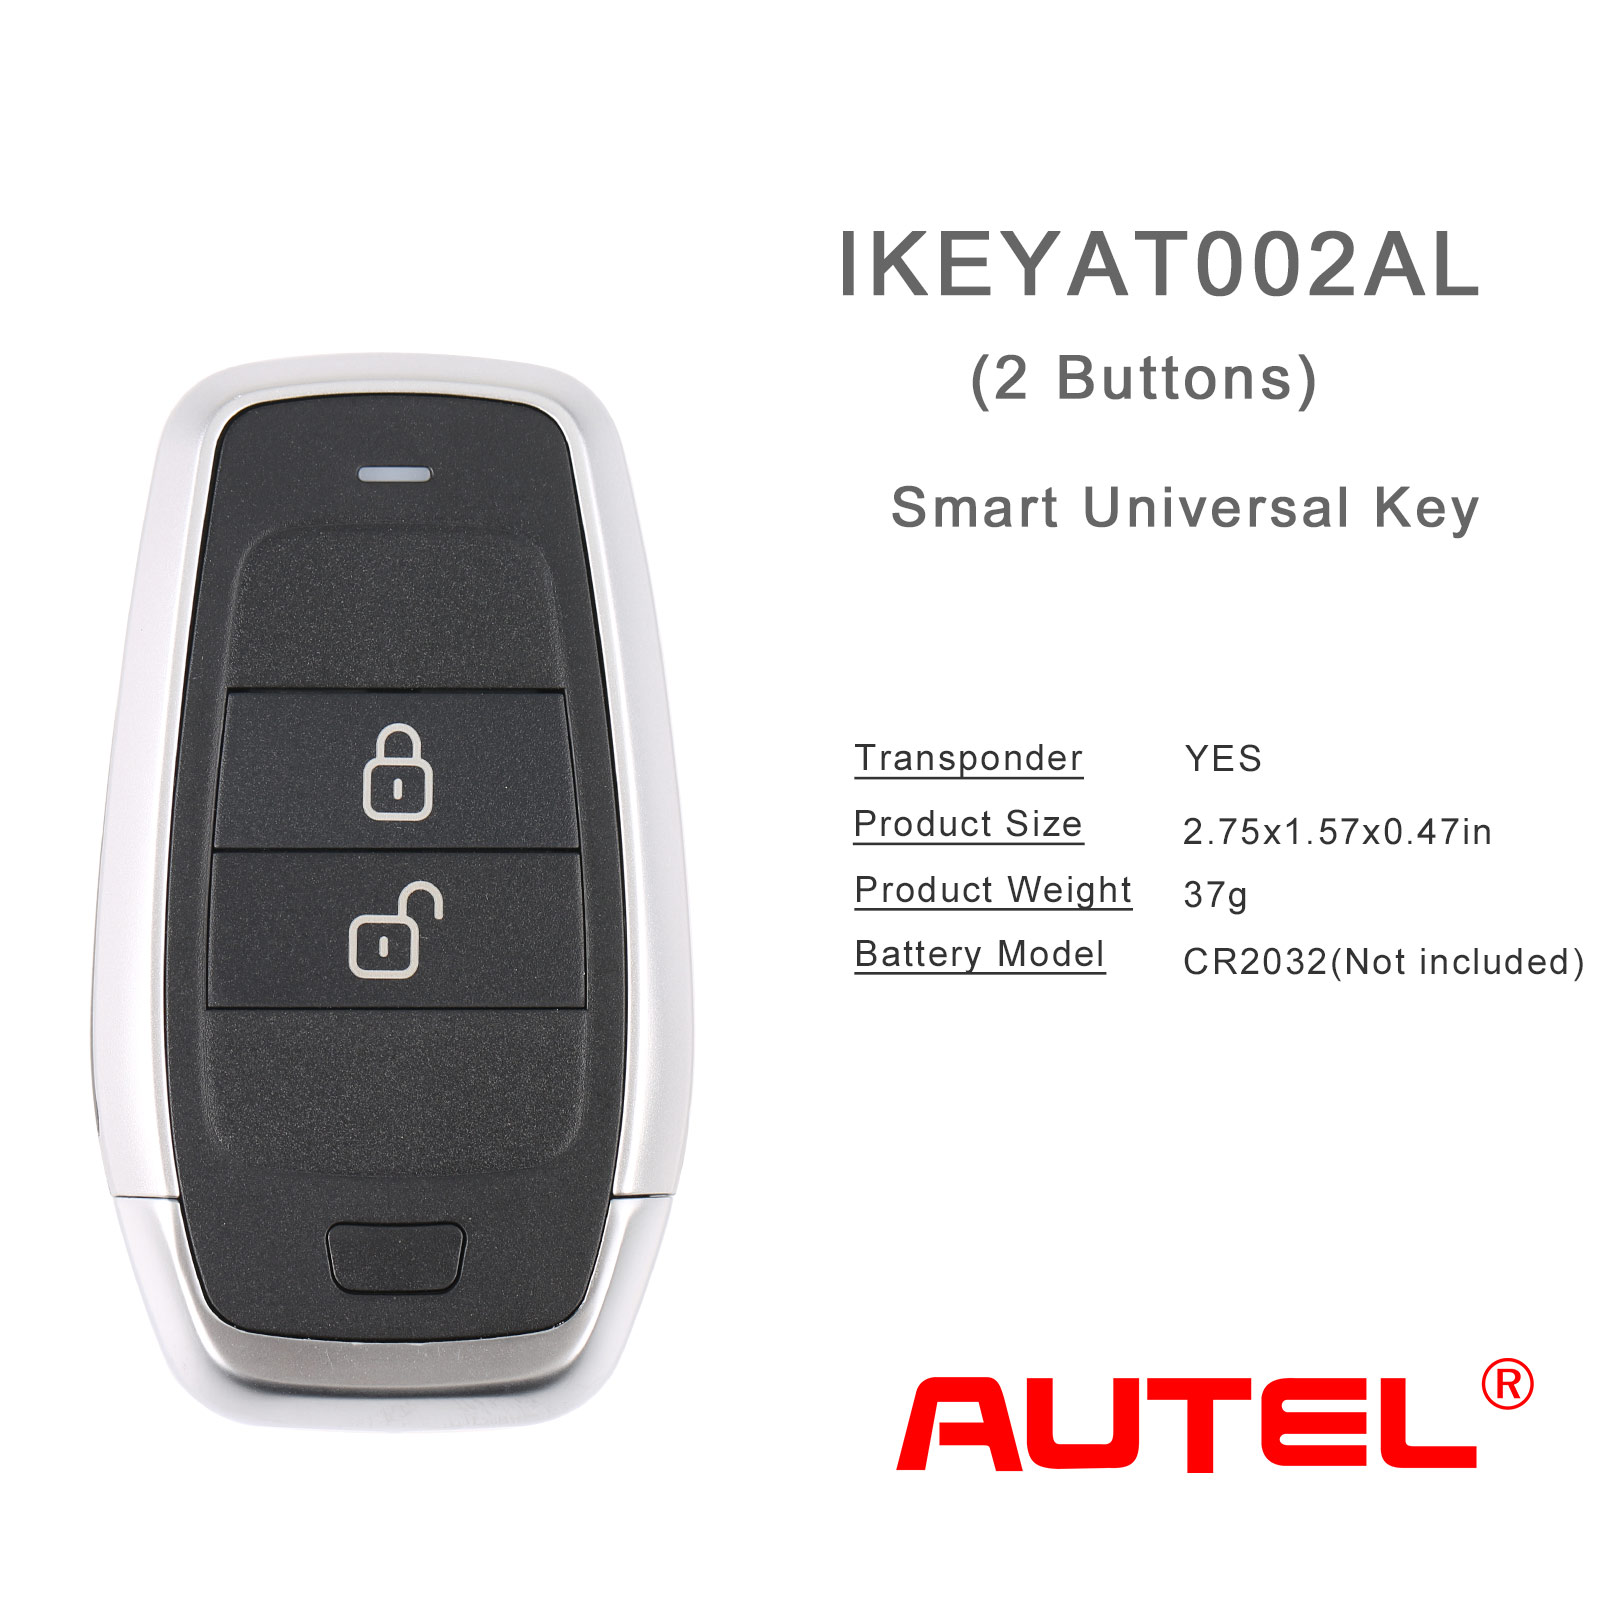 Autel IKEYAT002AL Key